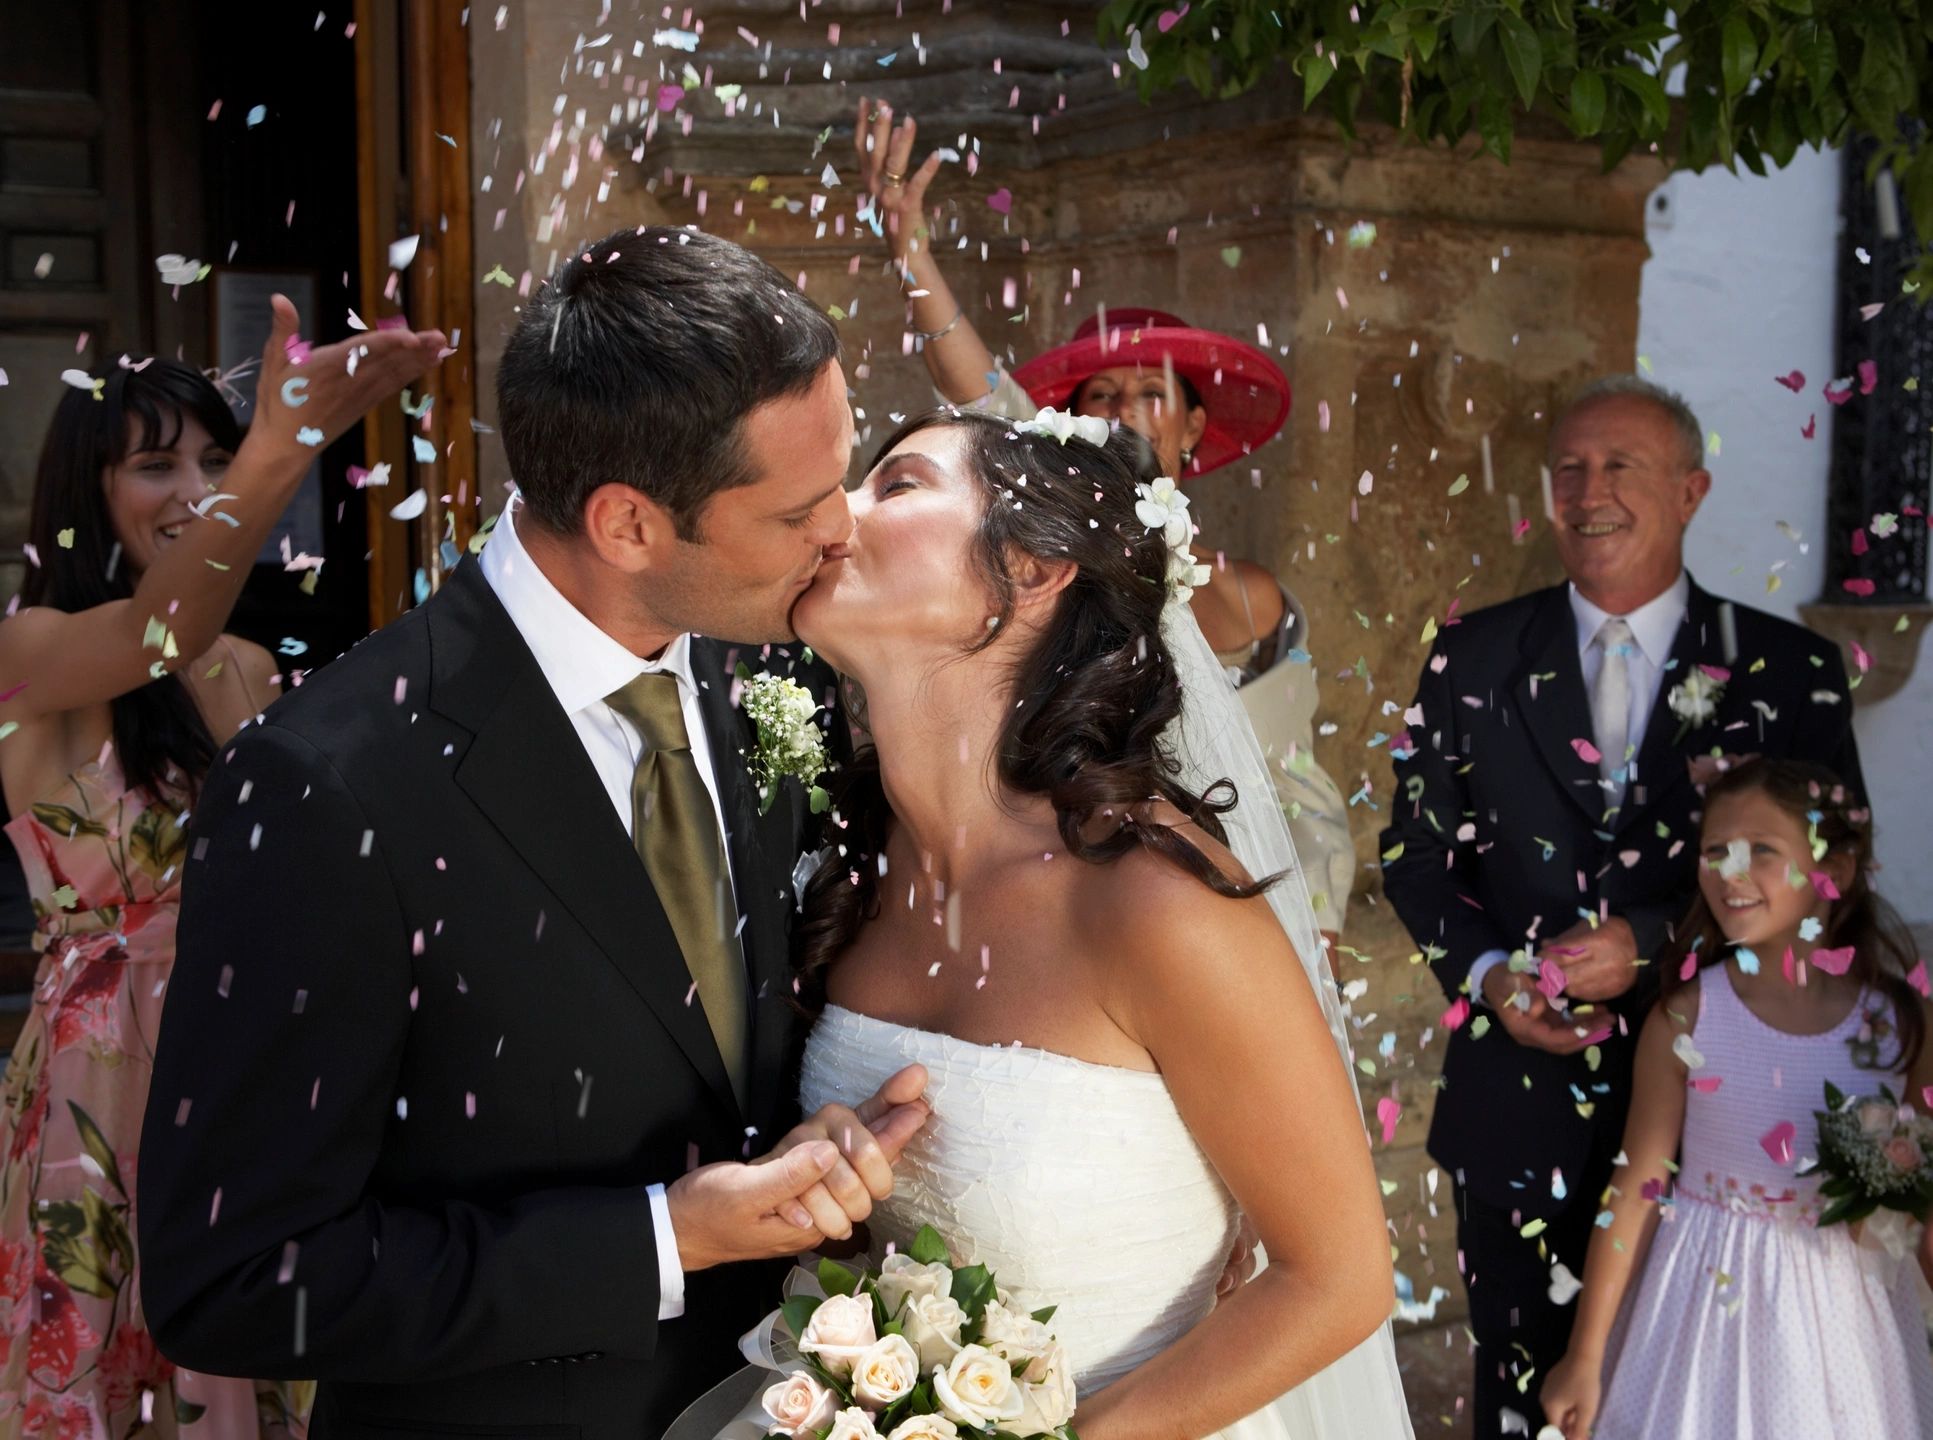 Wedding, People in love, Man and Wife, Confetti, Wedding Dress, Bridegroom, Family.